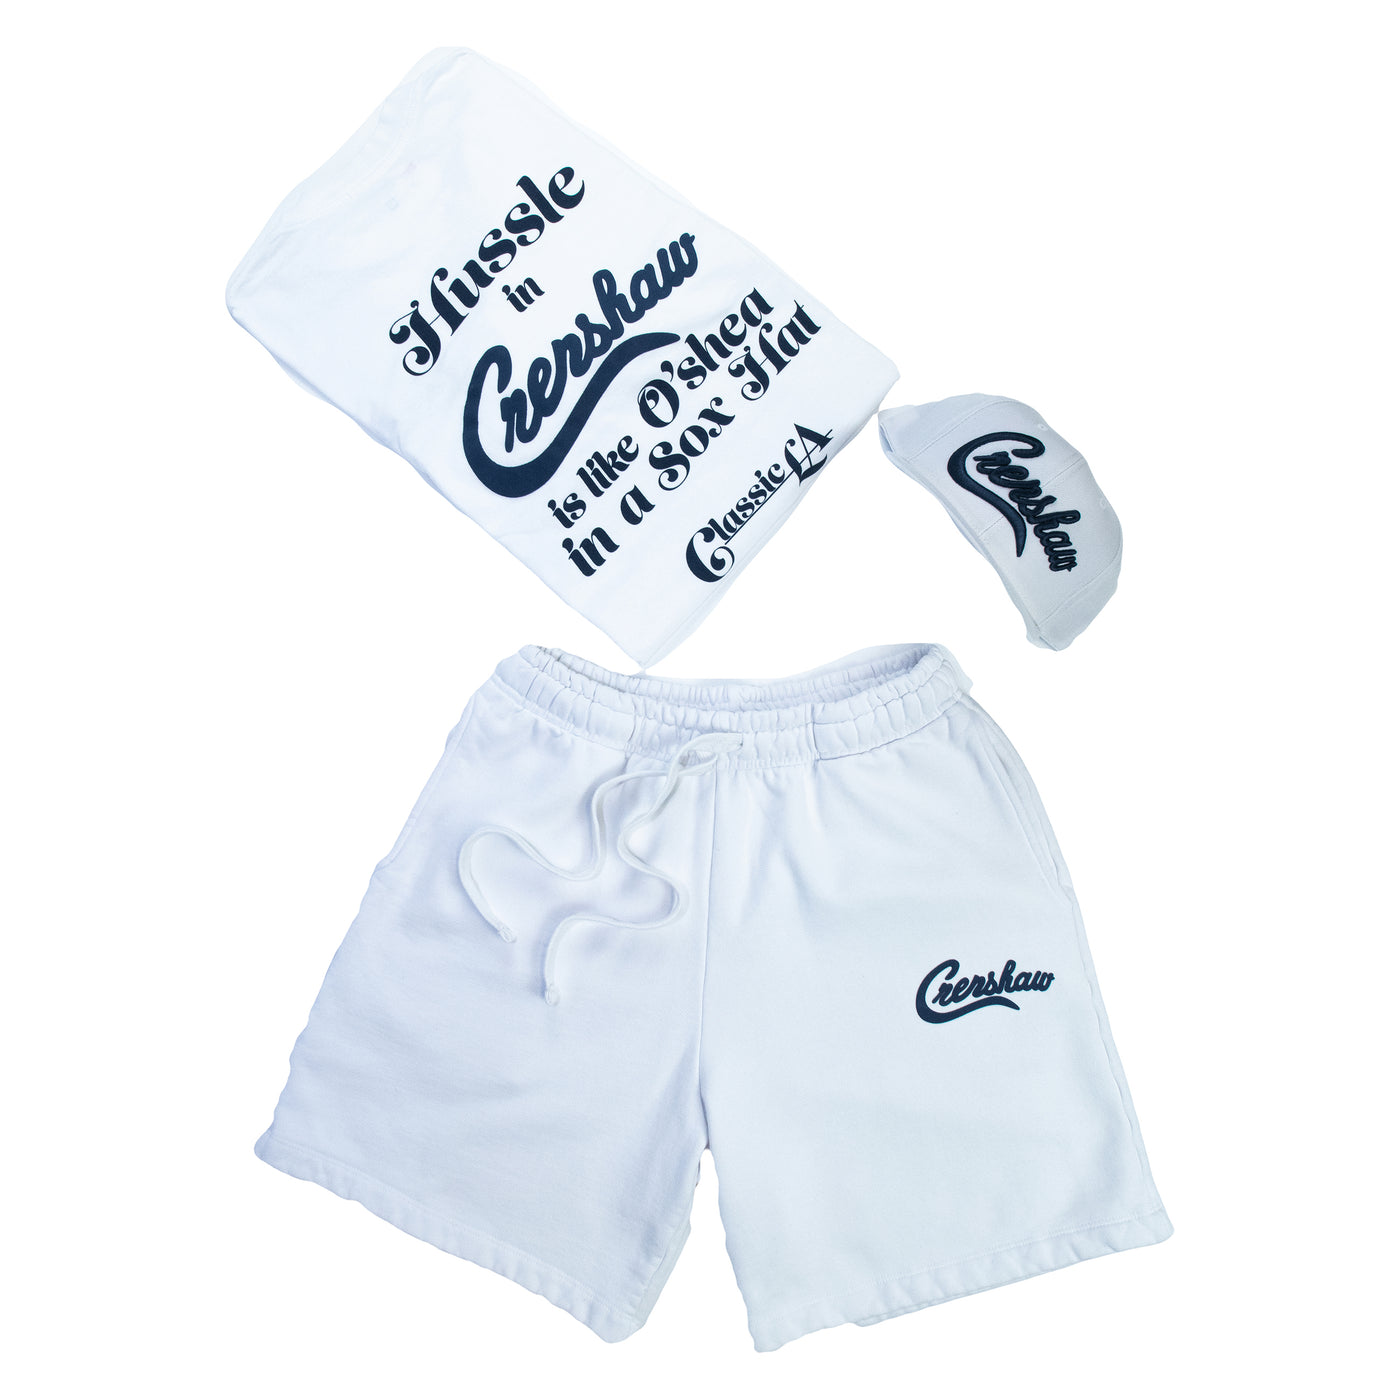 Crenshaw Classic LA T-Shirt - White/Navy - Matching Set